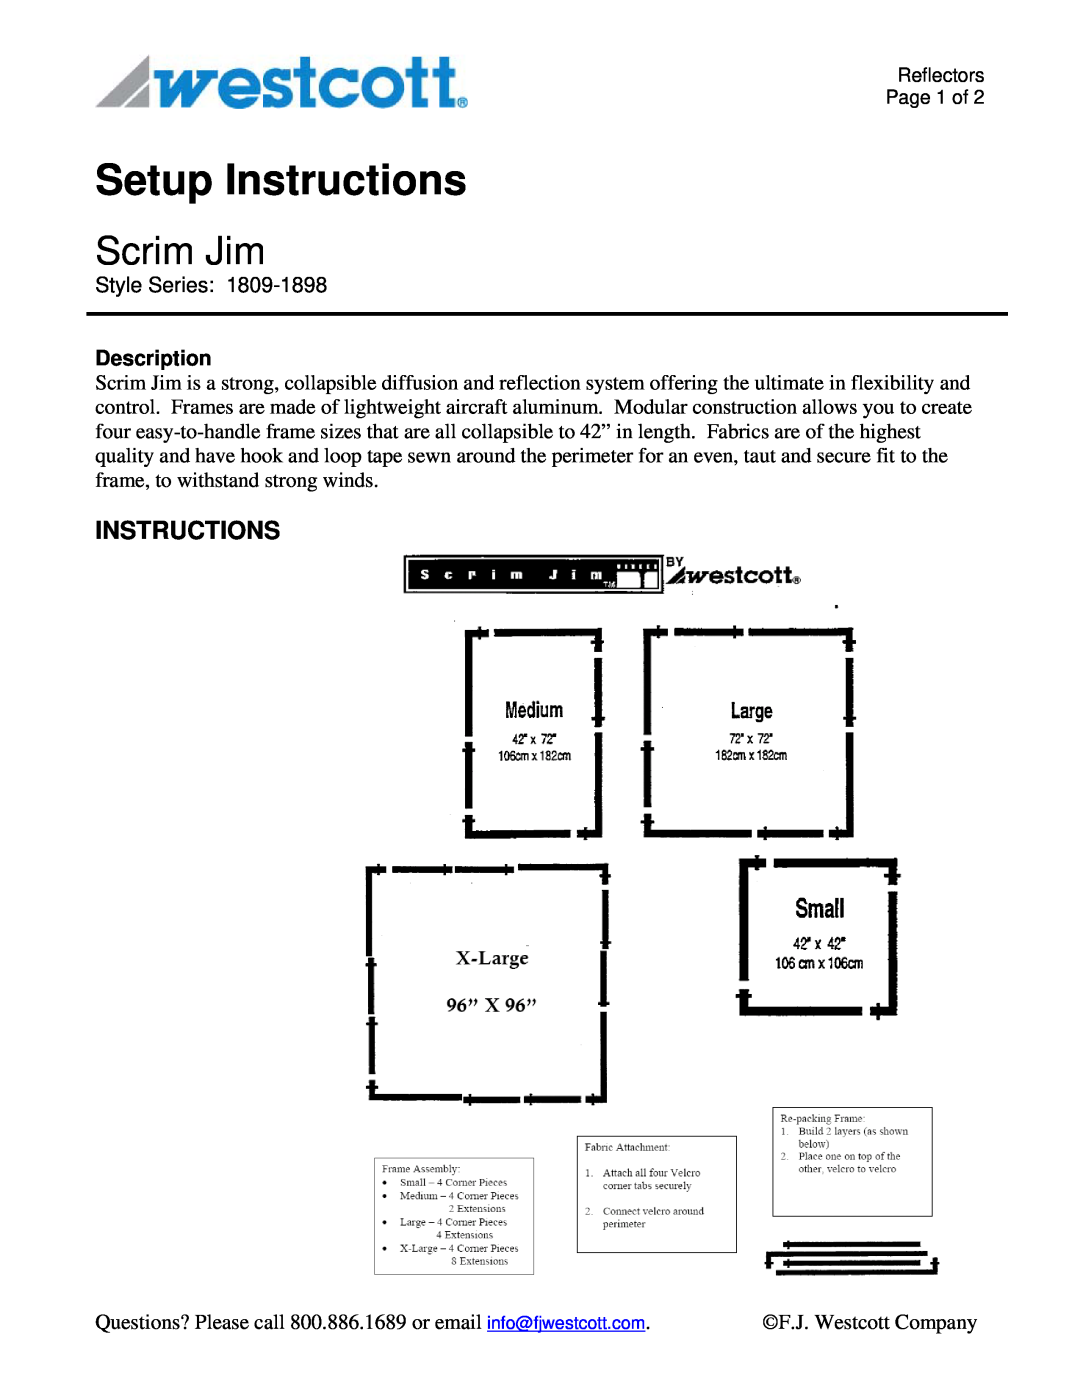 Westcott 1866 manual Setup Instructions, Scrim Jim, Description 